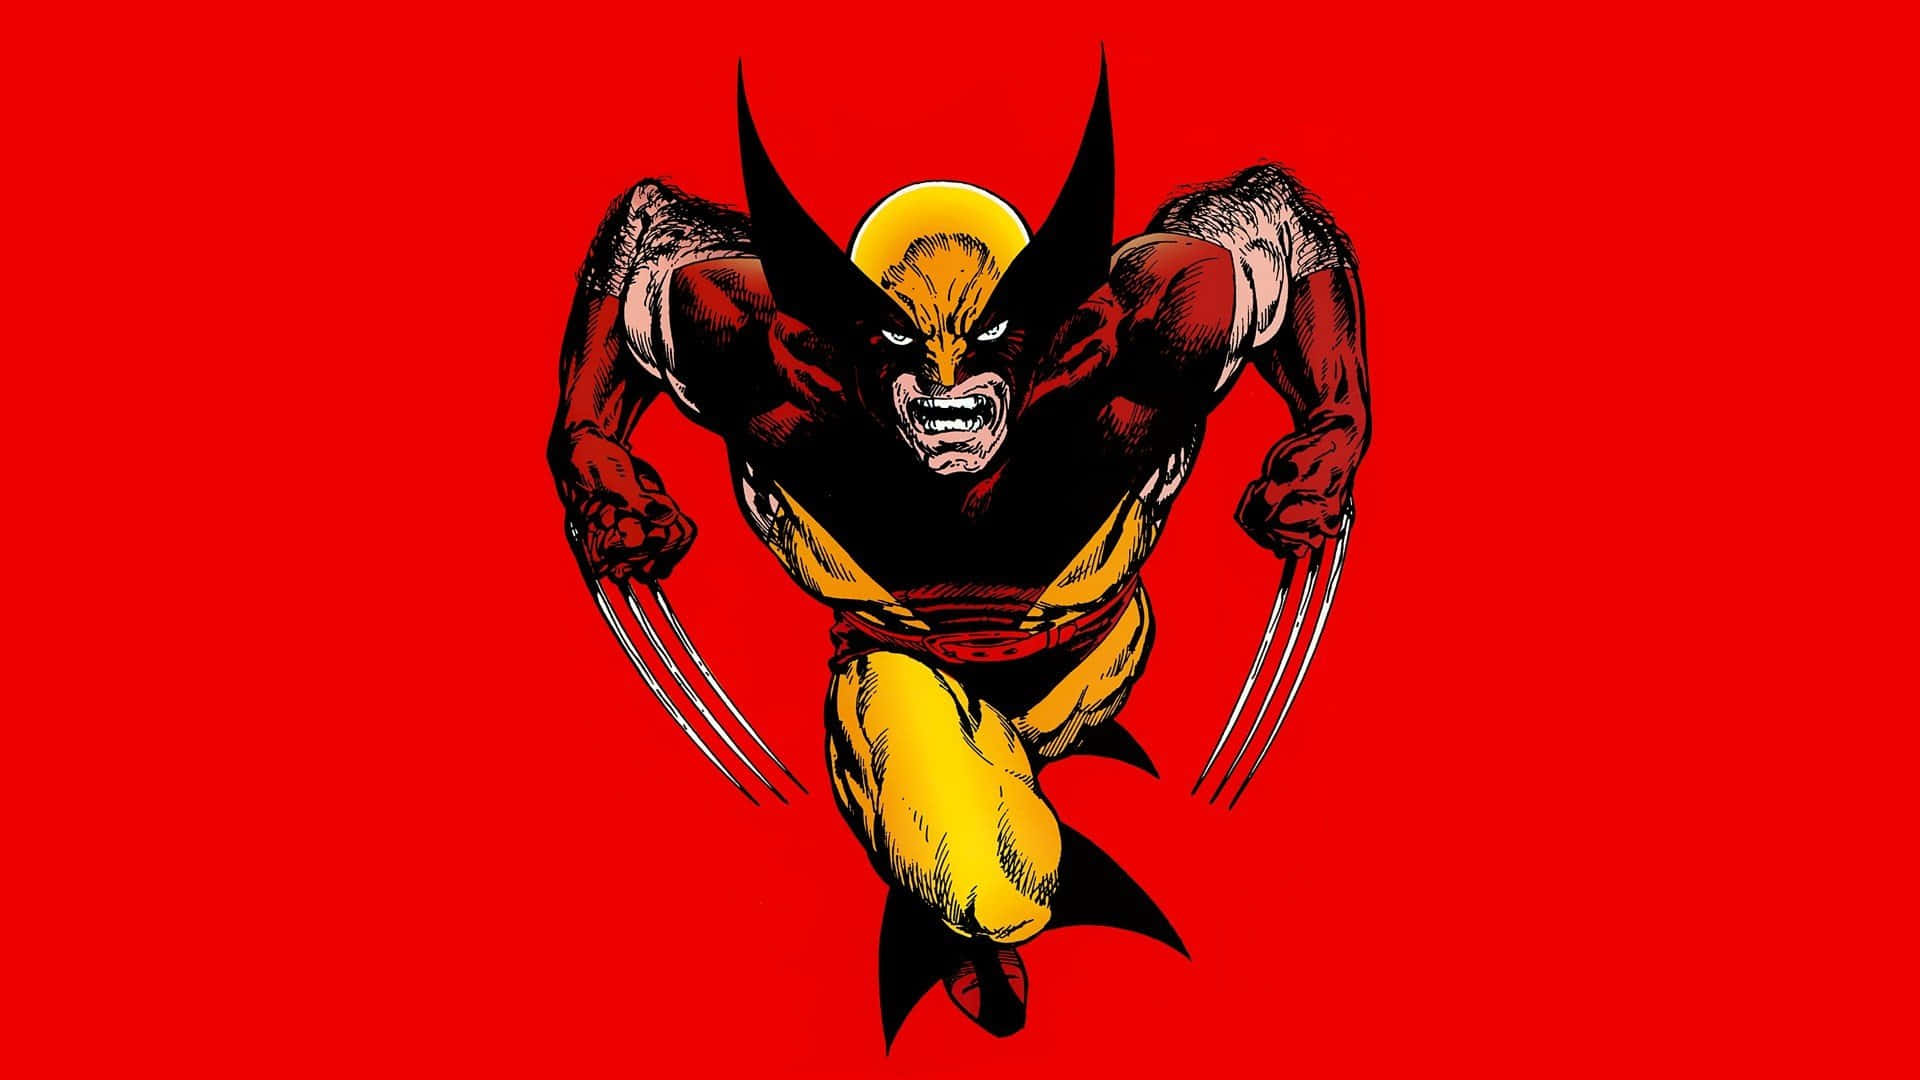 Wolverine - the raging X-Men hero